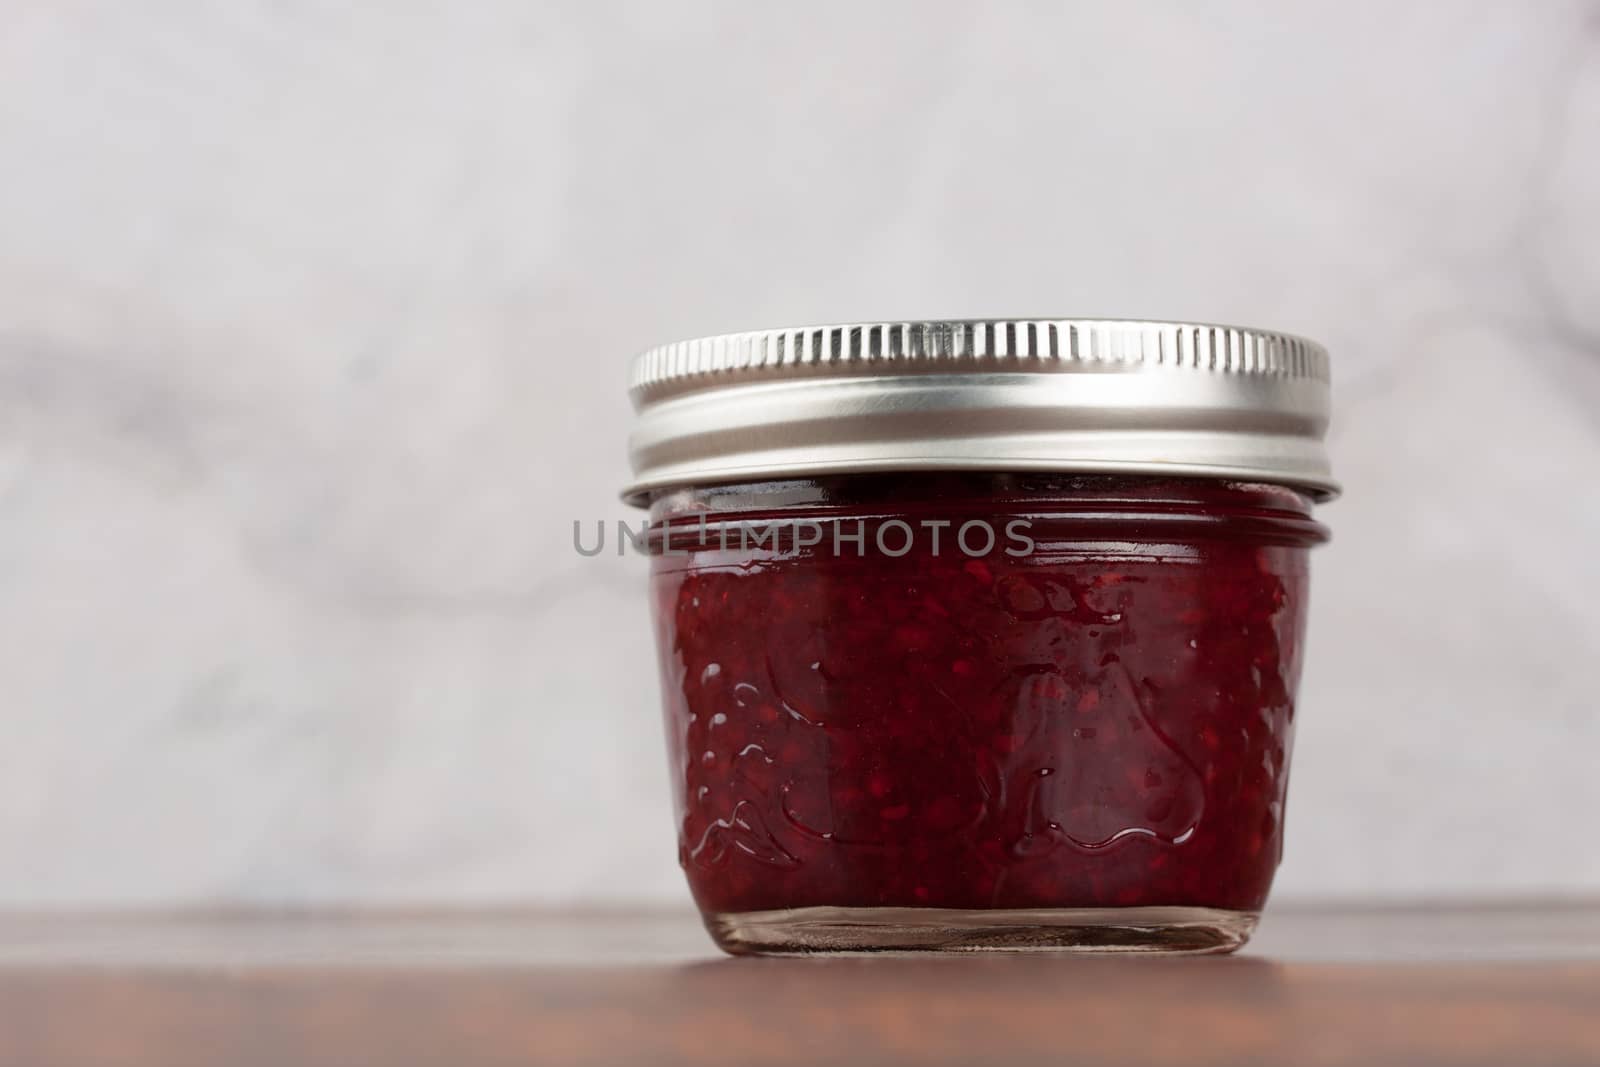 Delicious homemade raspberry jam in a reusable glass jar